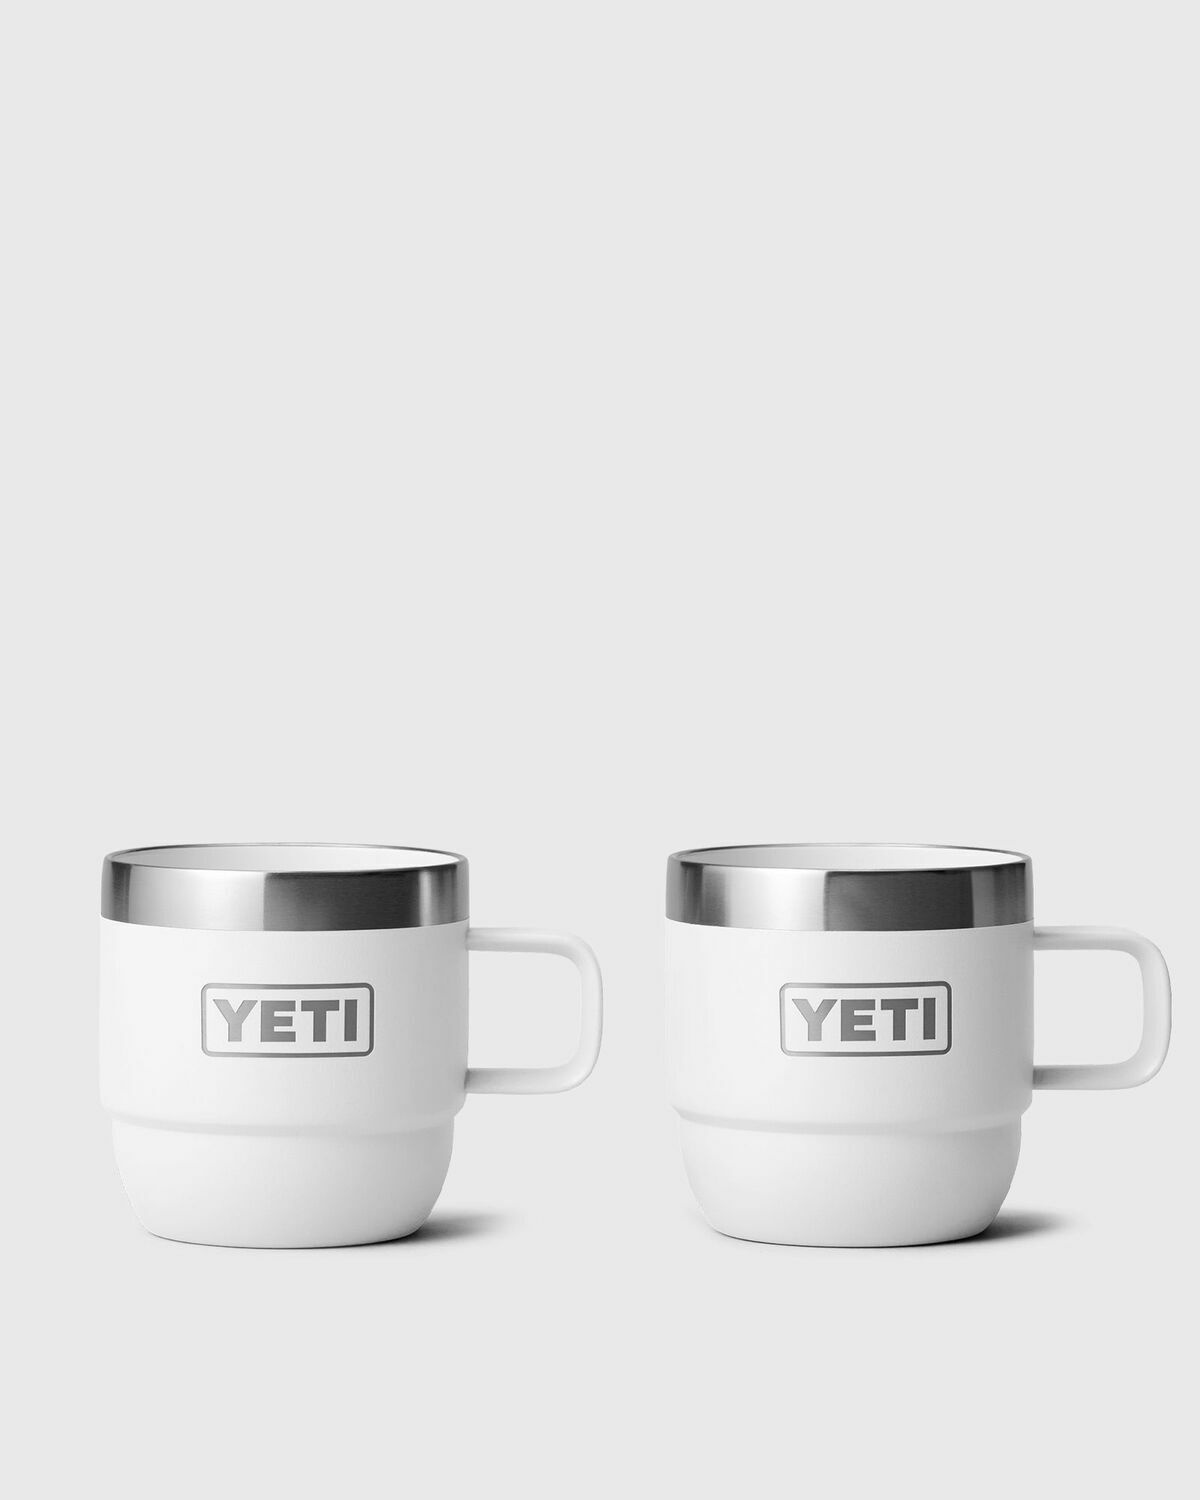 Yeti Rambler 4 oz. Stackable Espresso Cups - 2 Pack - Black